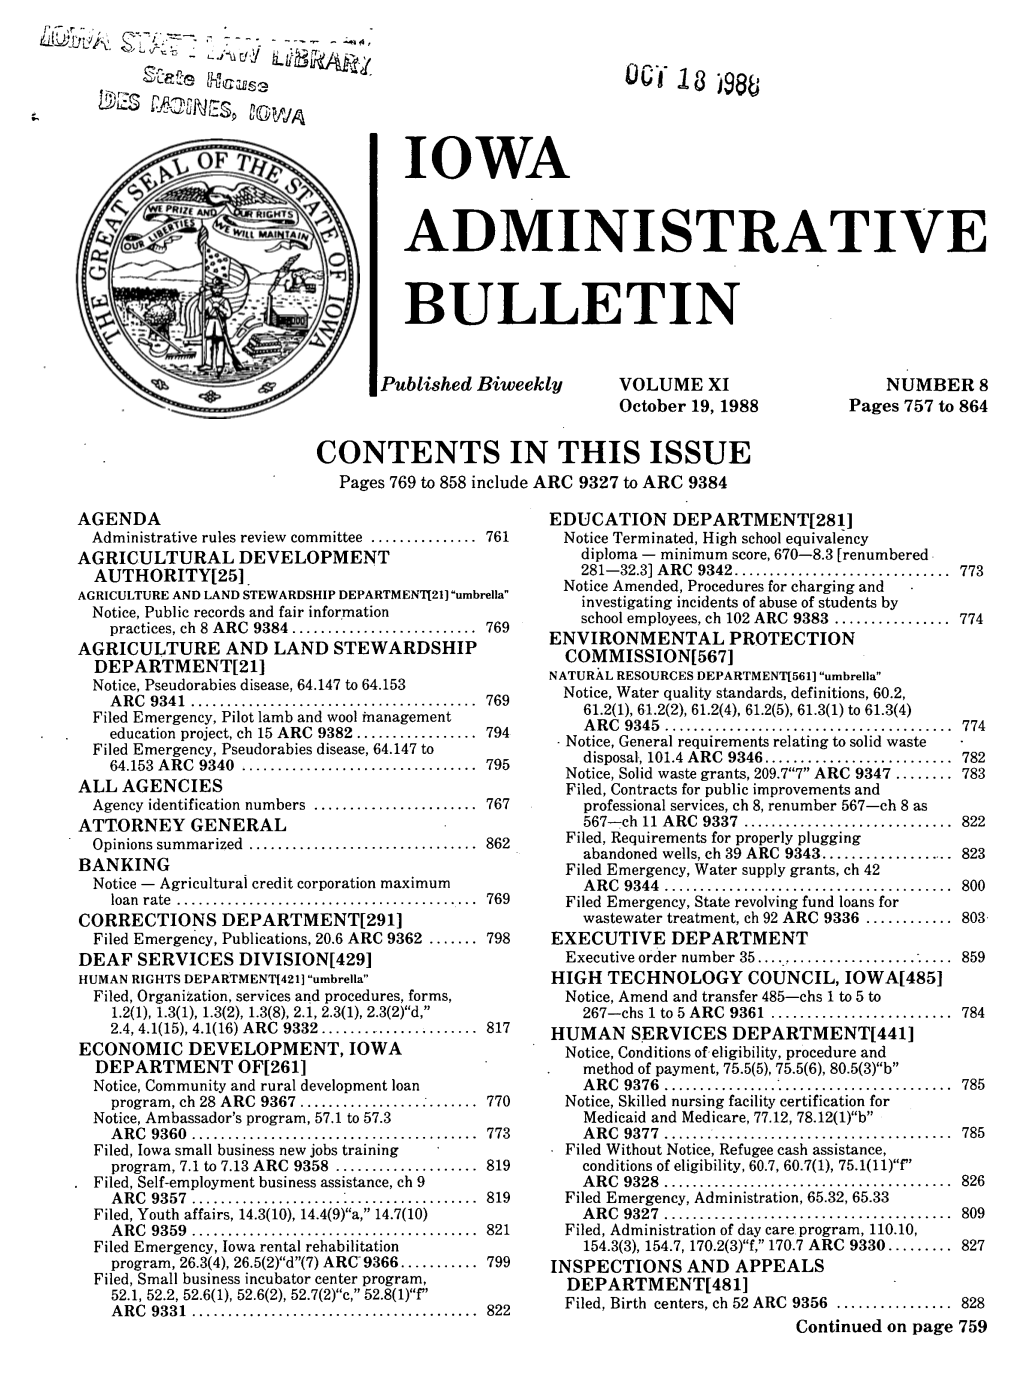 Iowa Administrative Bulletin